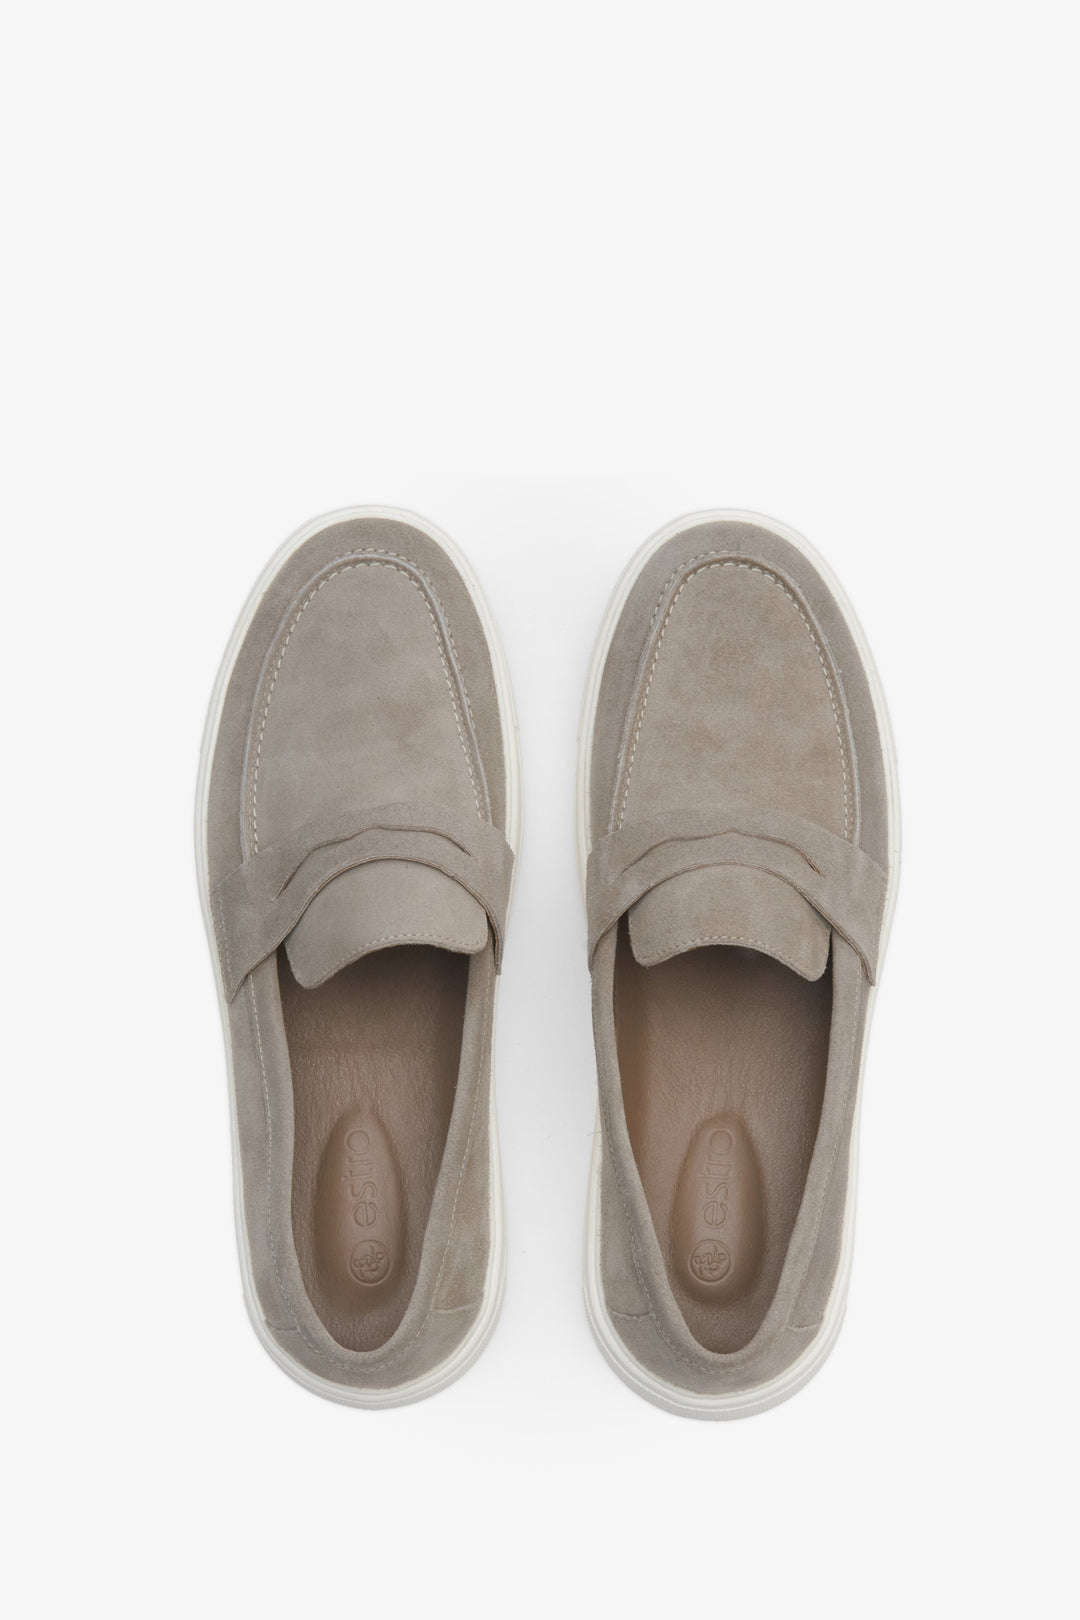 Men's suede beige loafers Estro - presentation form above.